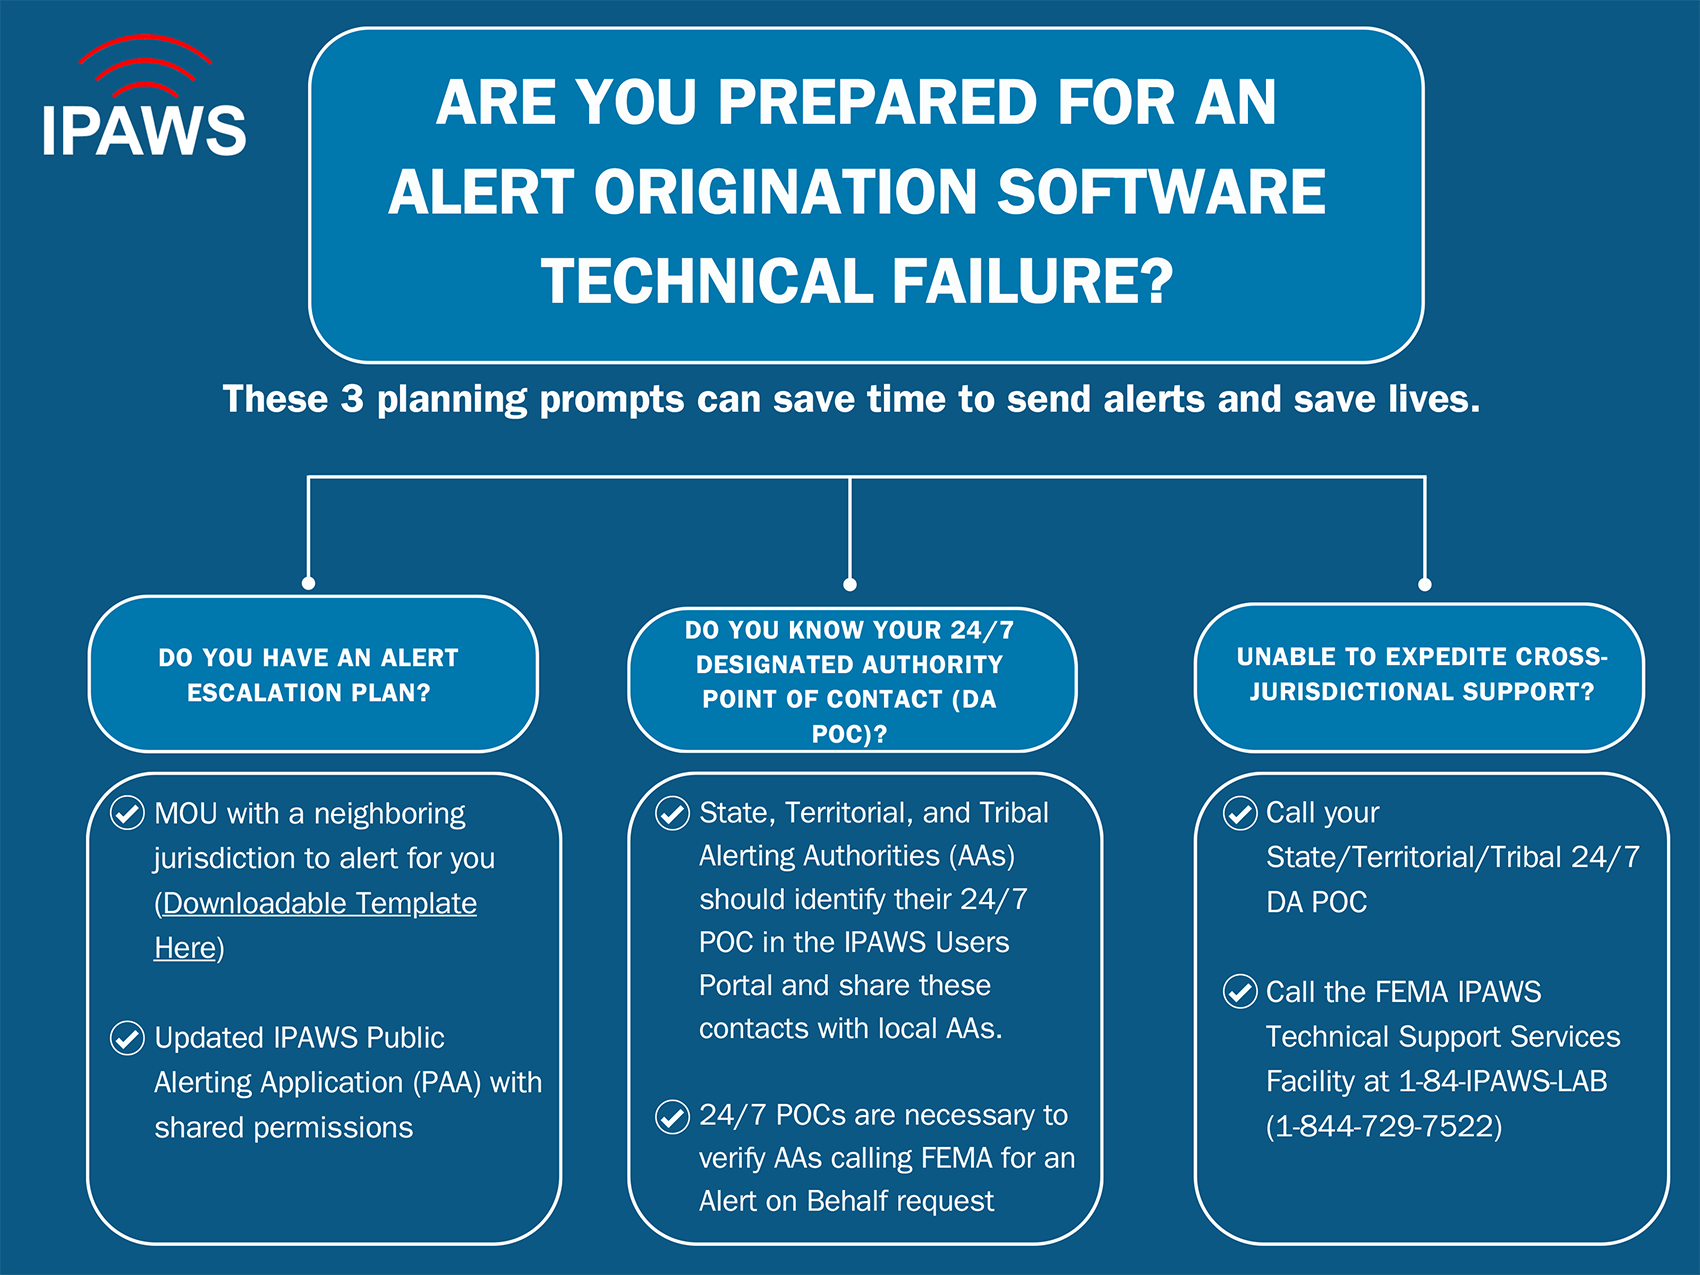 Are You Prepared for an Alert Origination Software Failure?